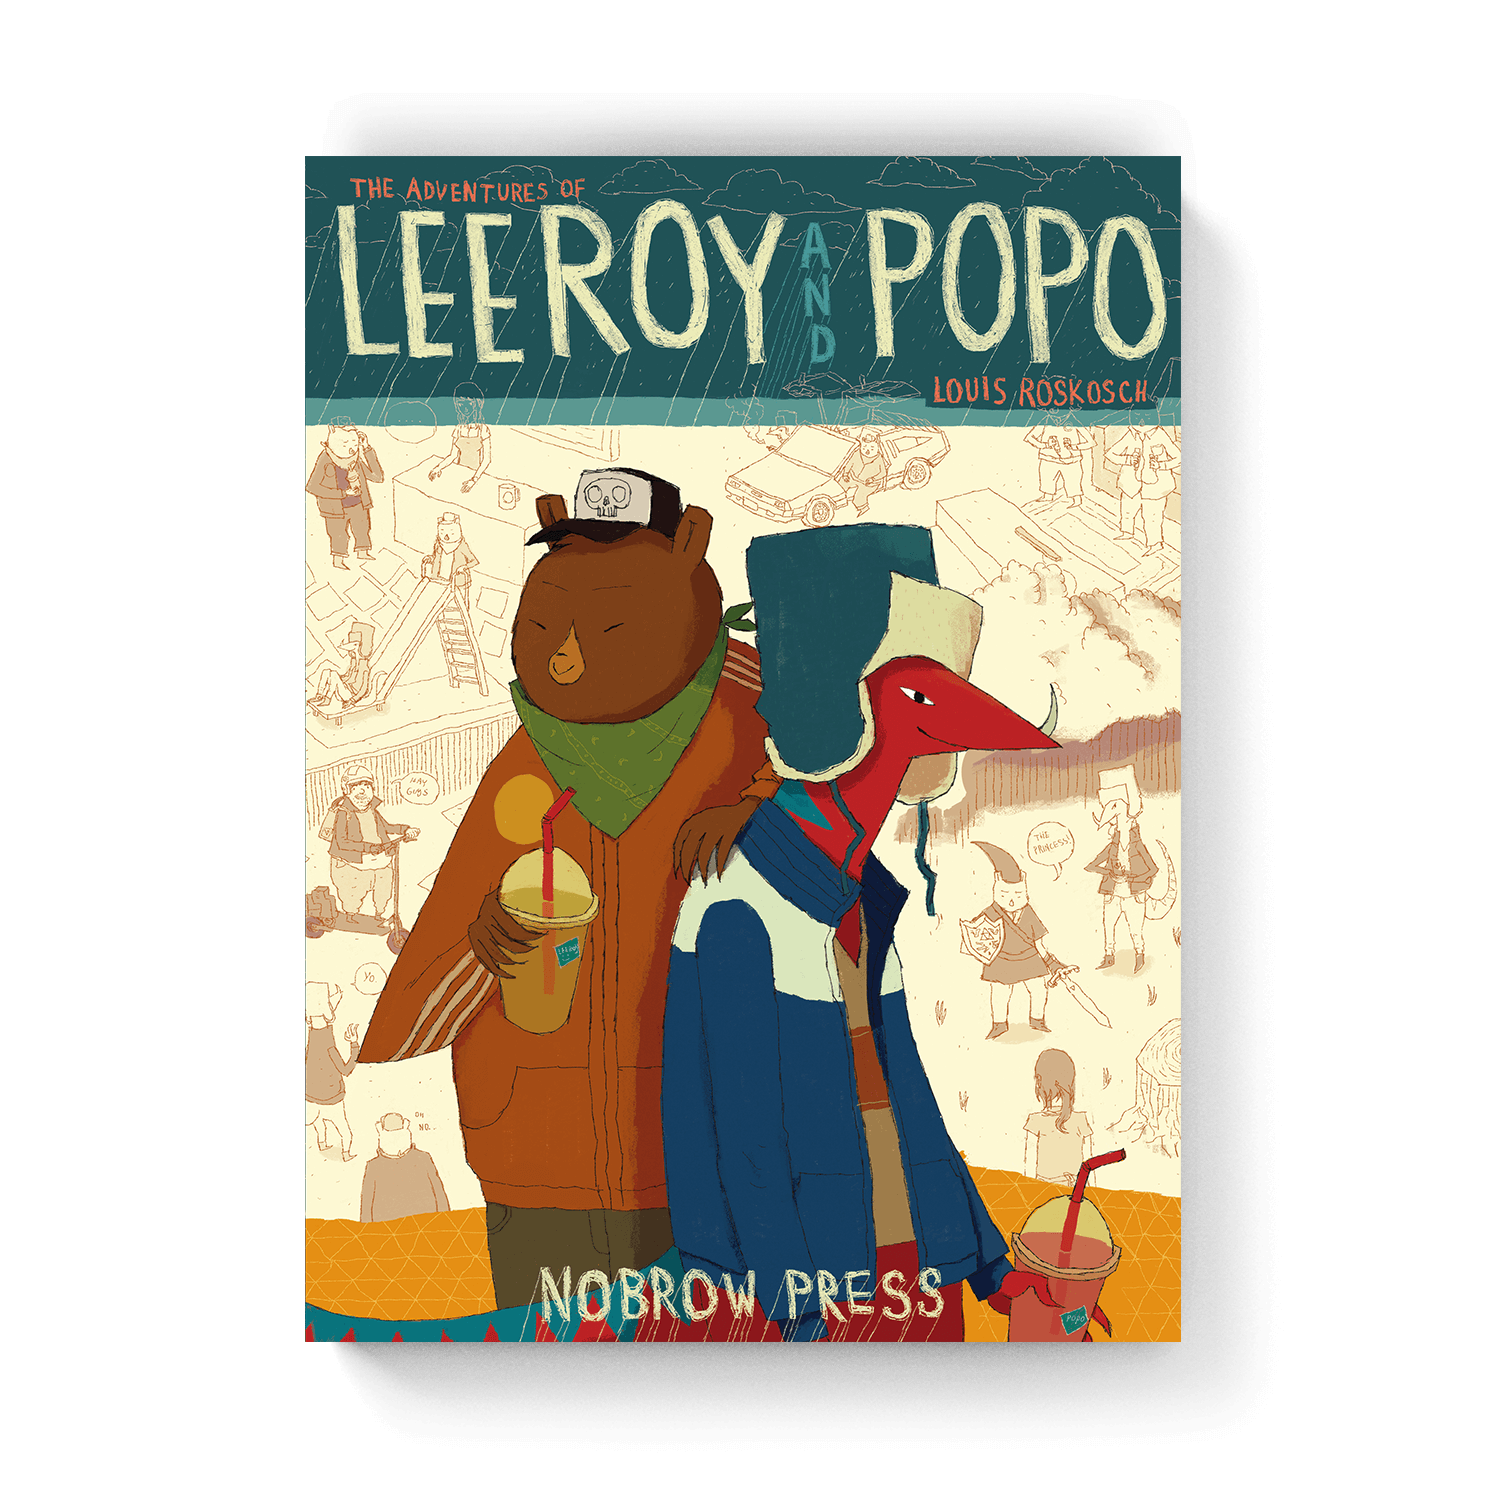 Leeroy and Popo